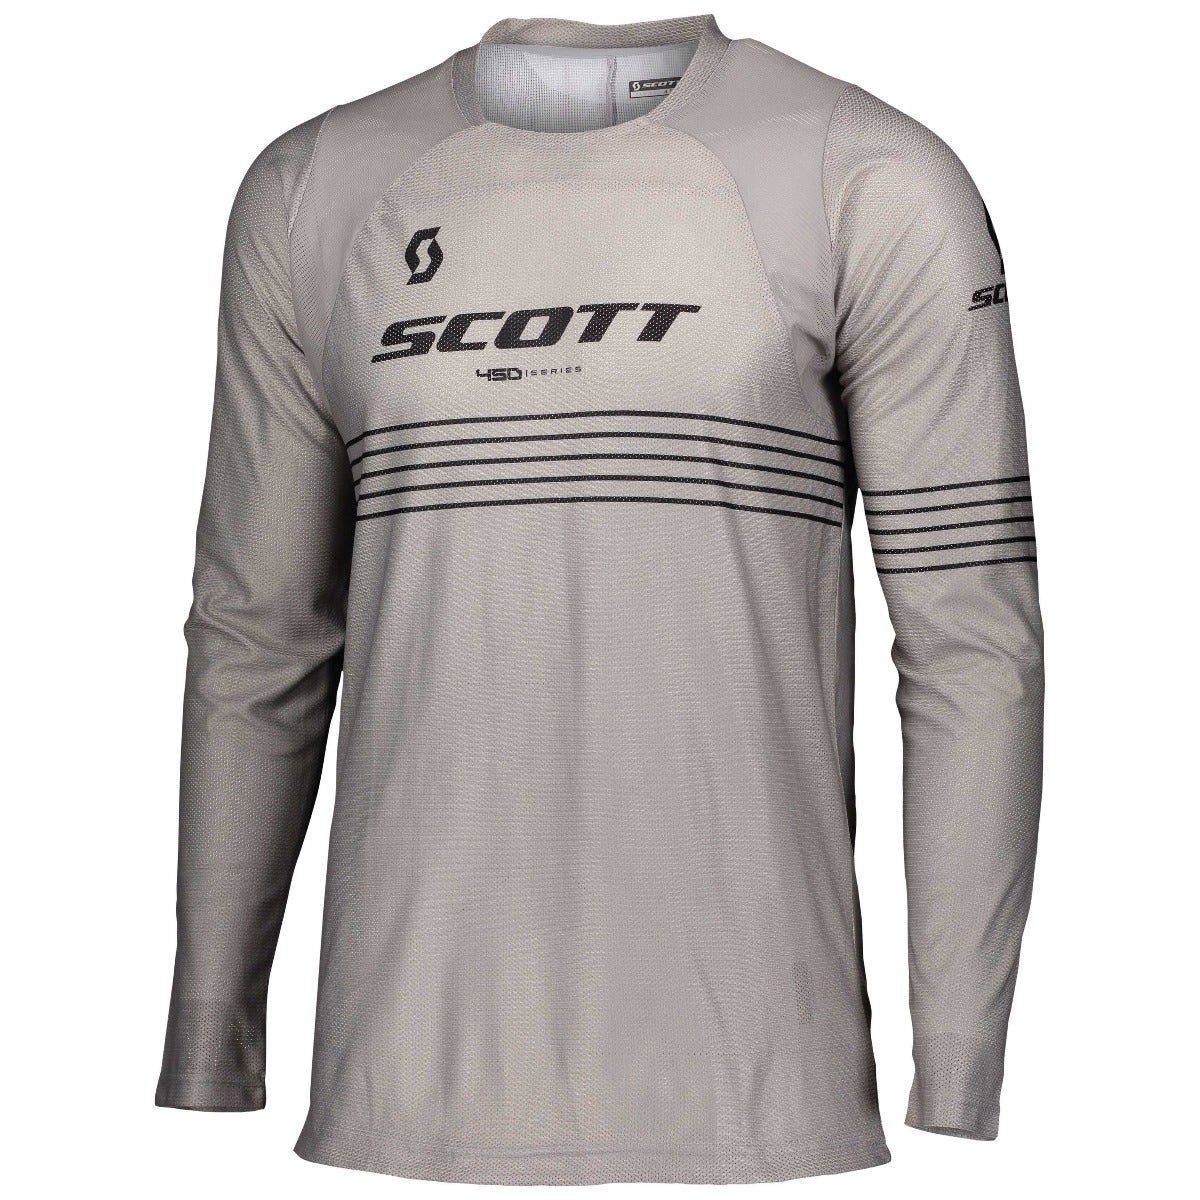 Scott 450 Angled Light 2021 Jersey Grey/Black